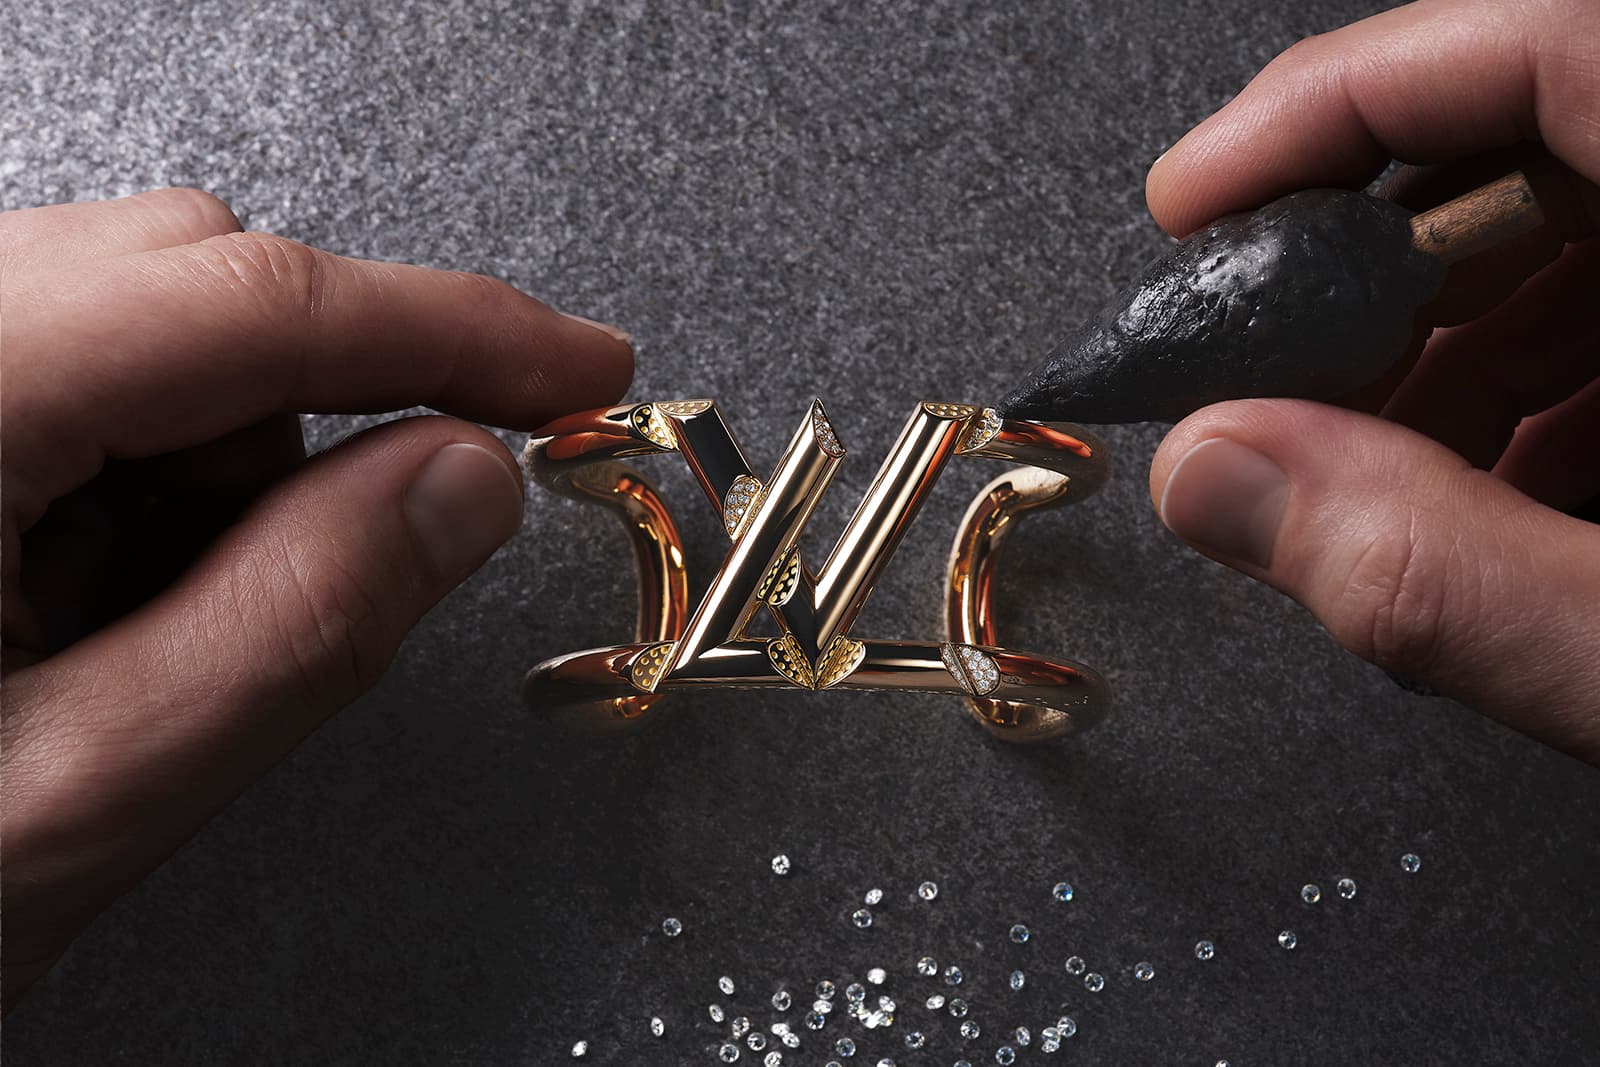 Louis Vuitton unveils new LV Volt jewelry collection